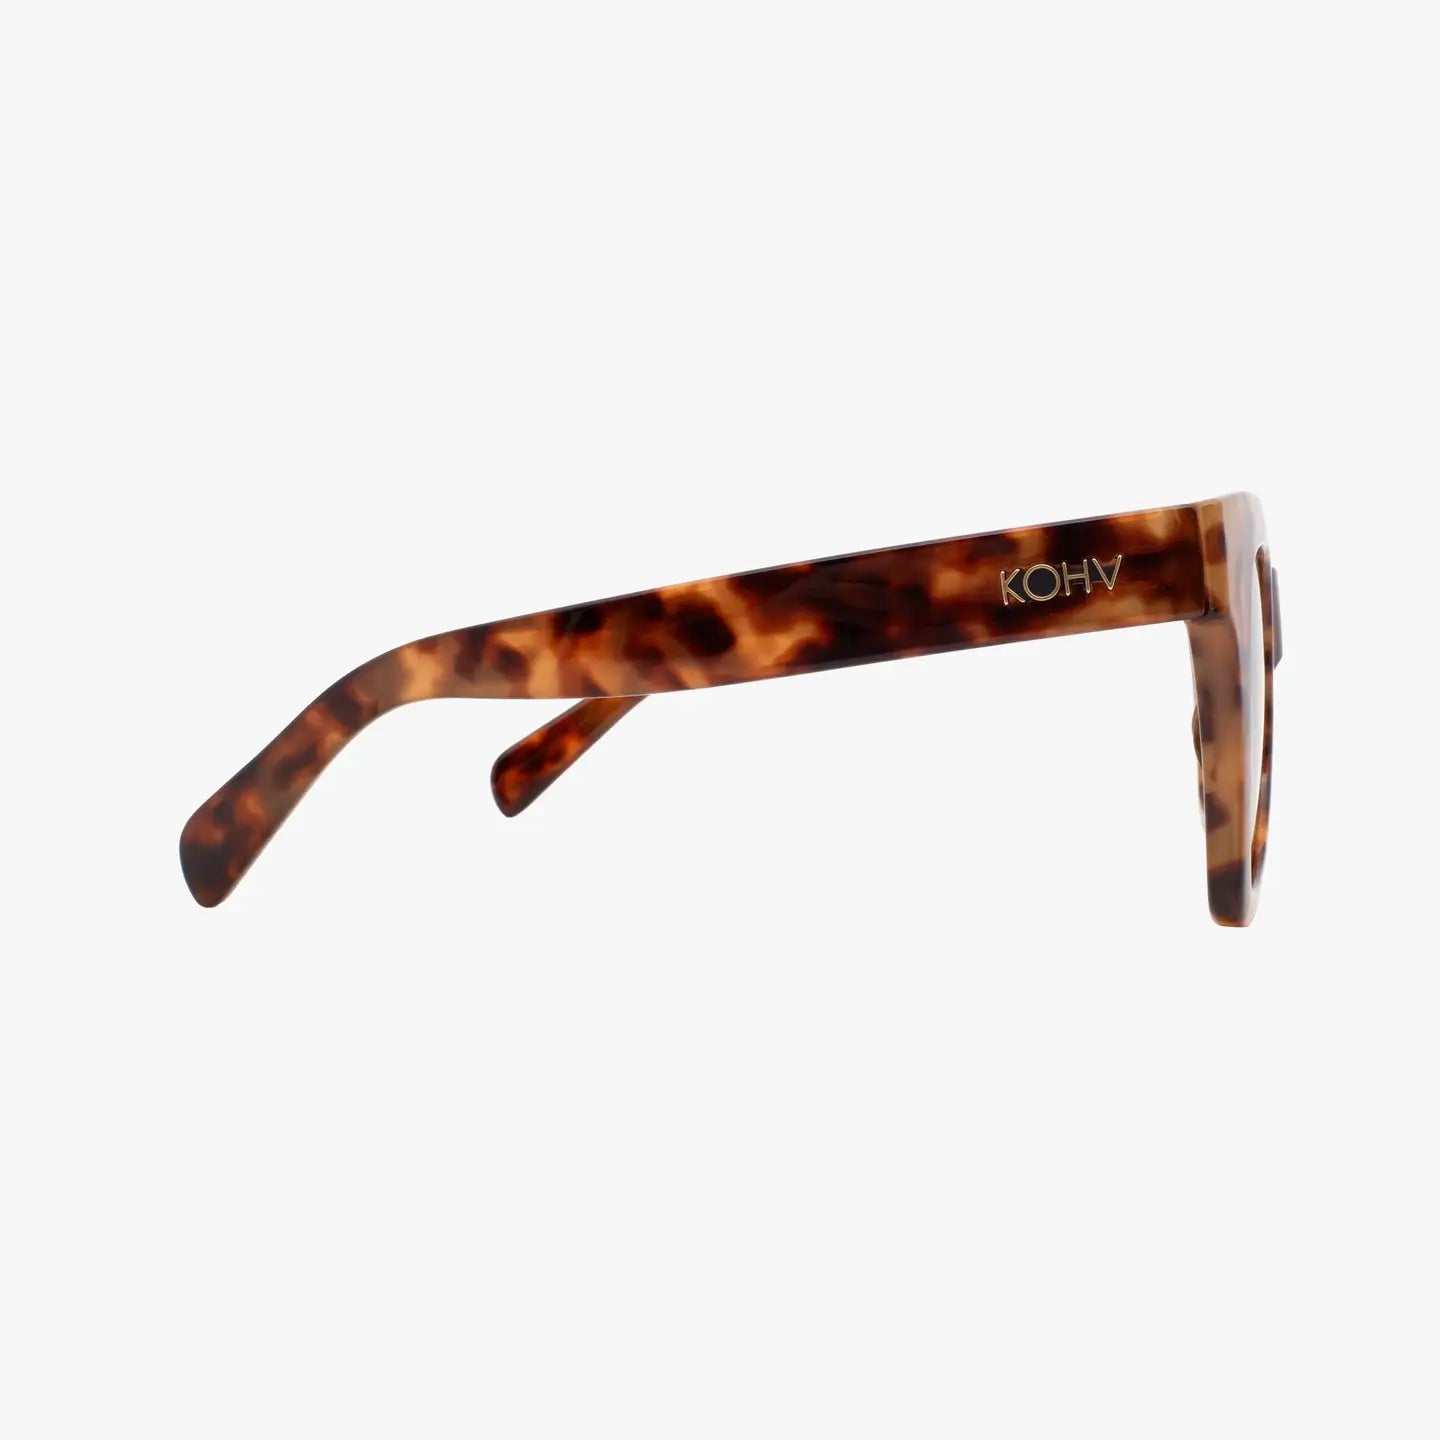 Bailey Amber Tortoise - Polarized Sunglasses